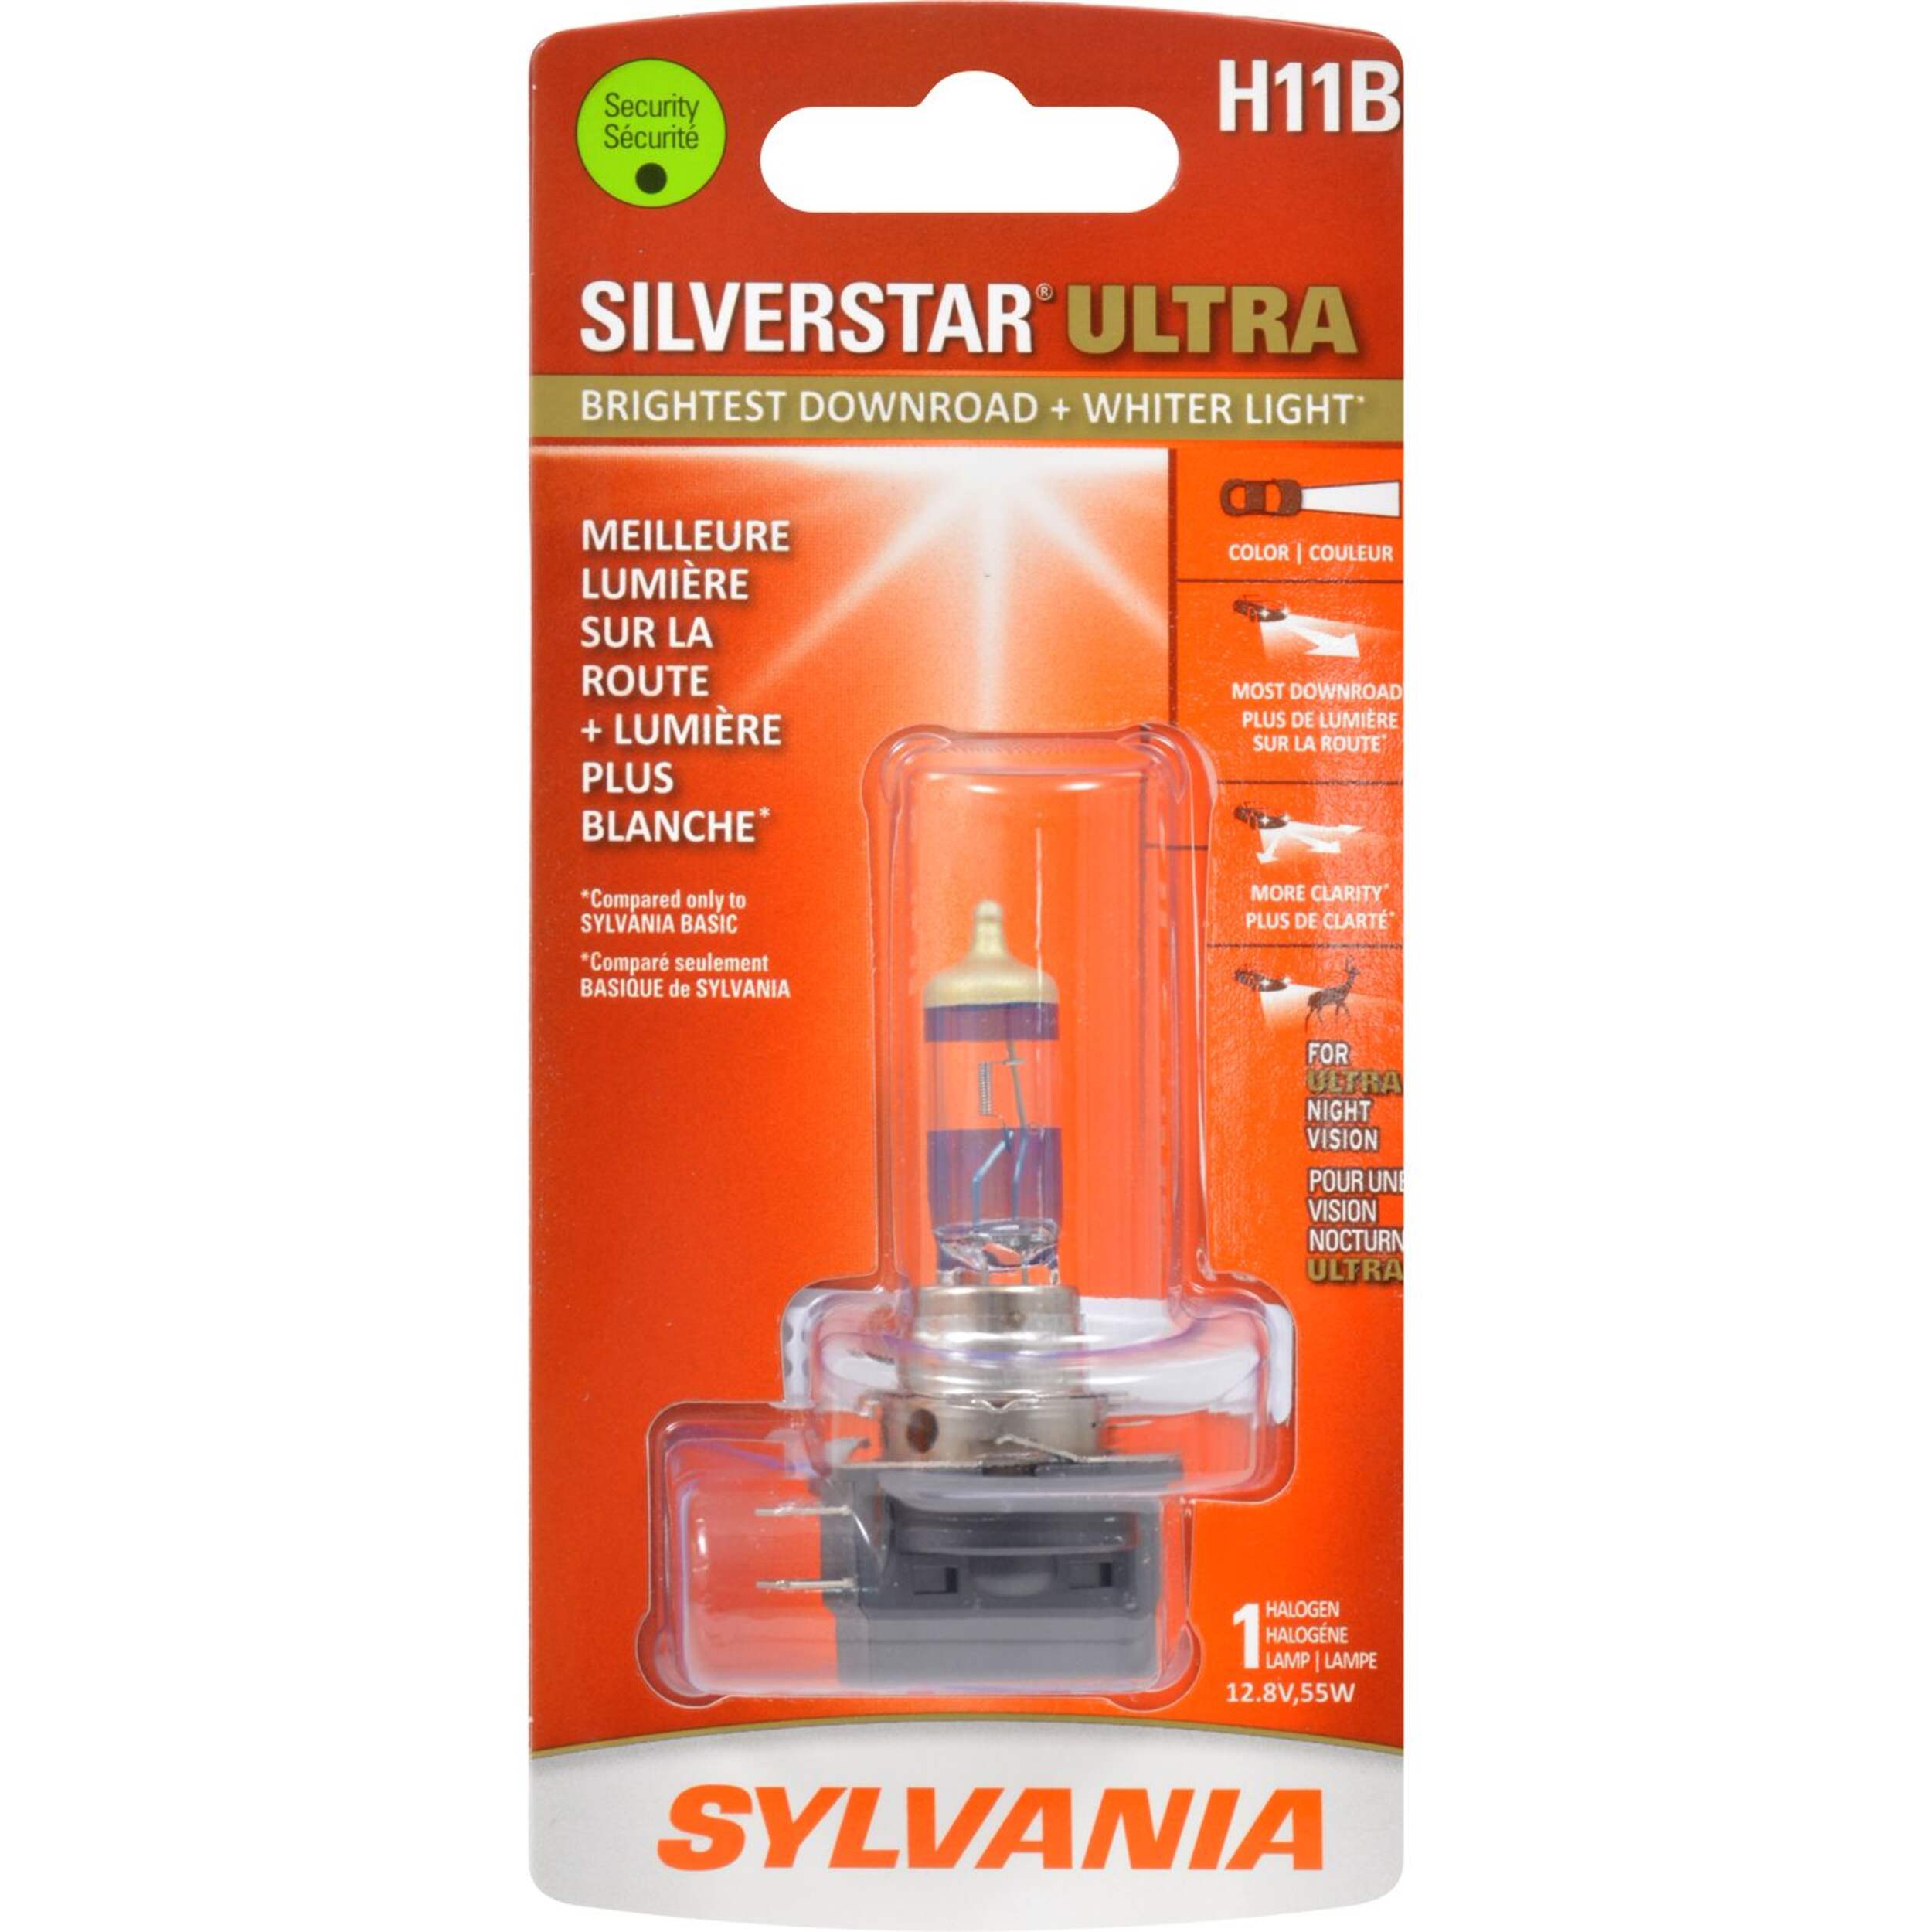 SYLVANIA H11 SilverStar ULTRA Halogen Headlight Bulb, White Light (1-pack)